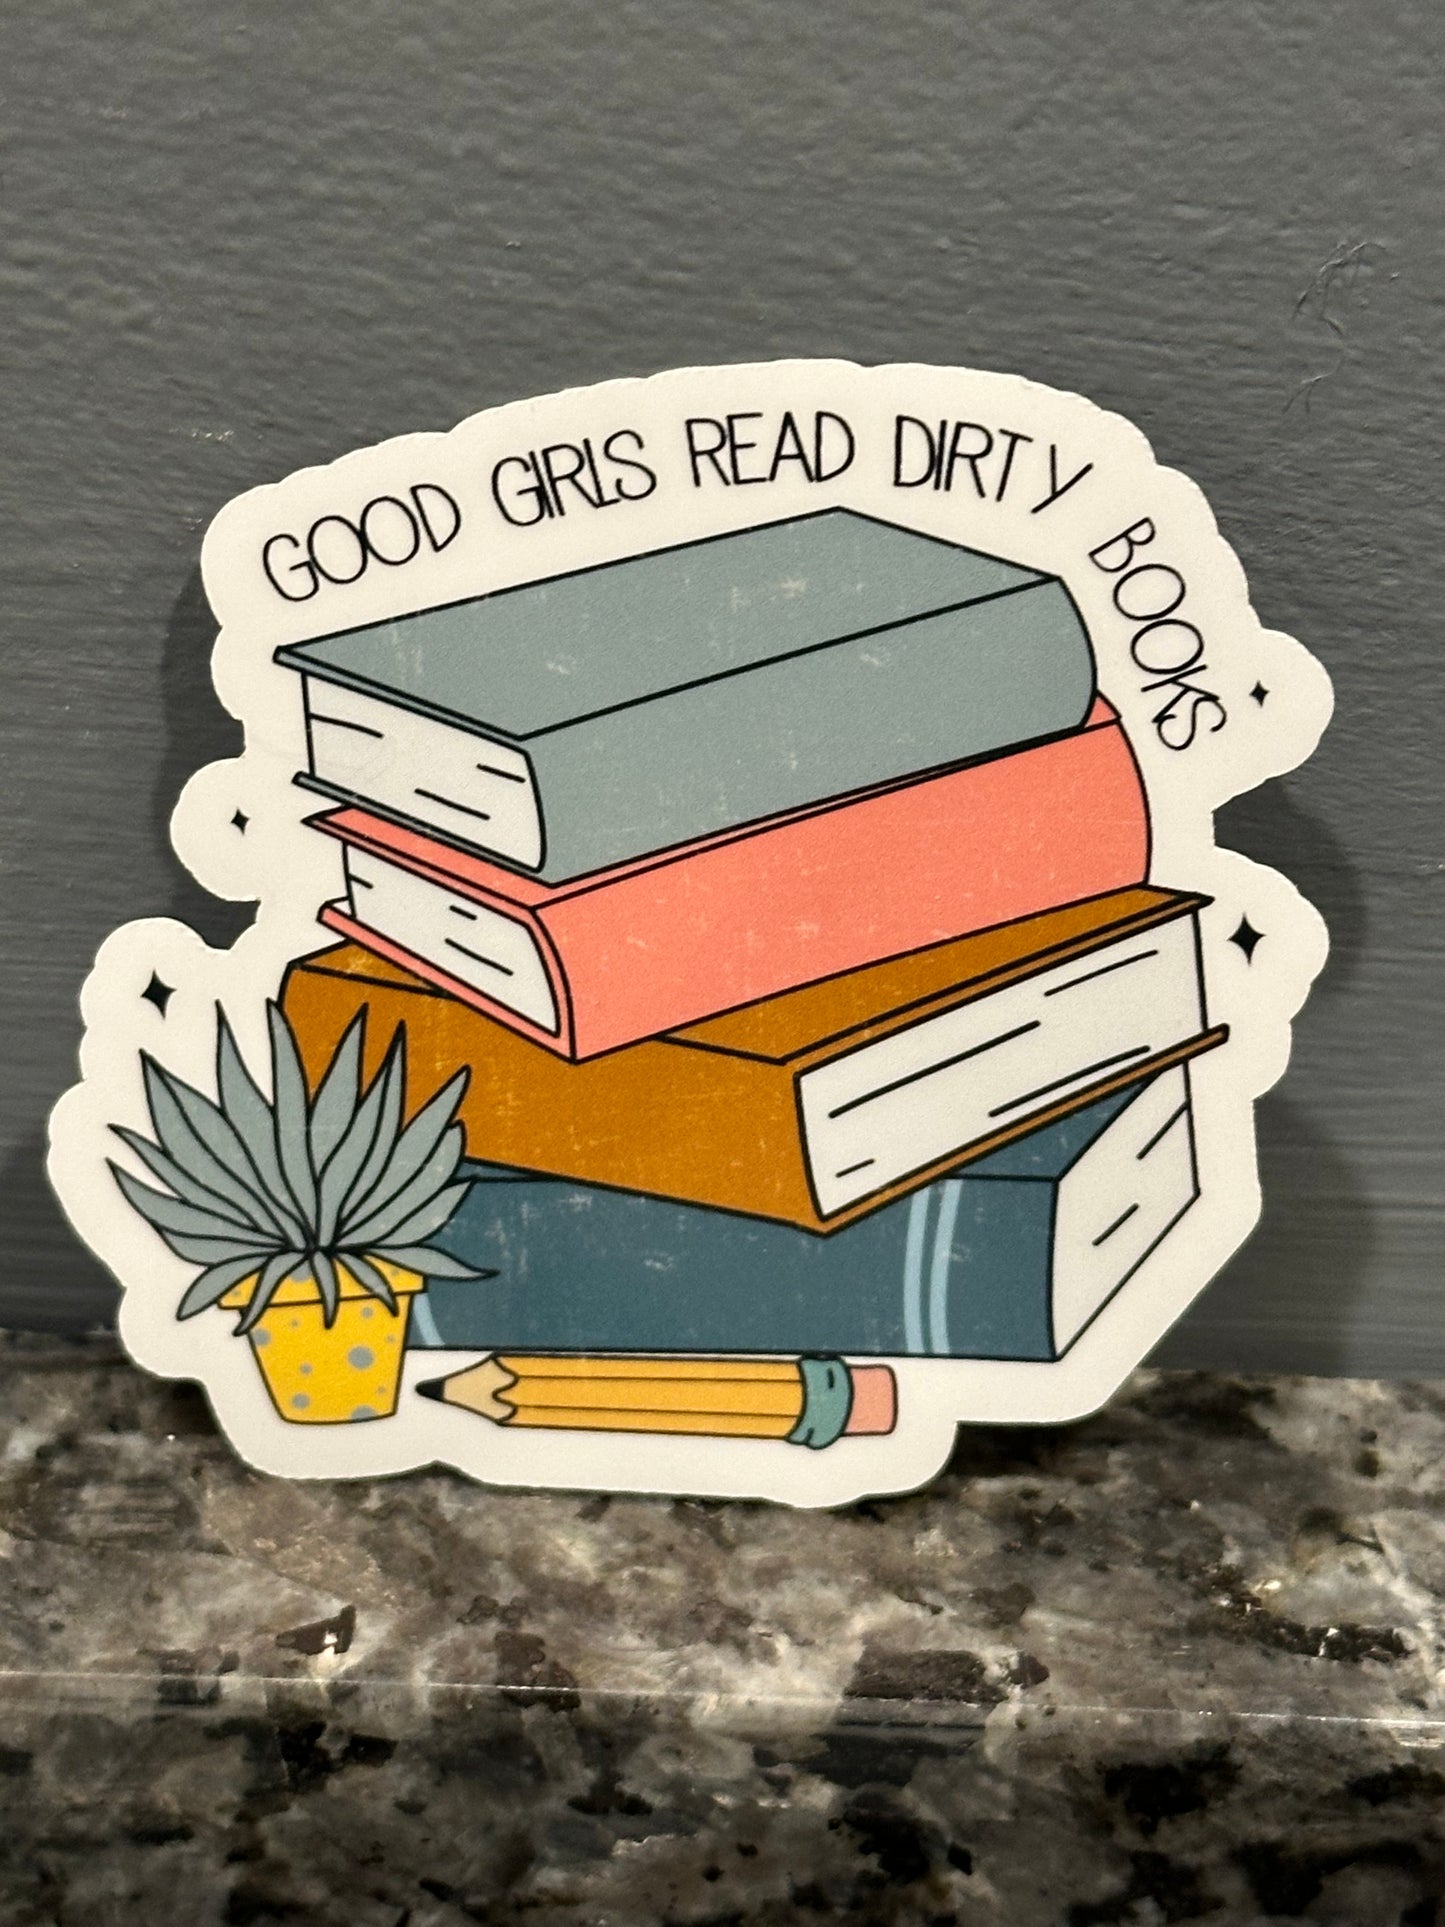 Good girls read dirty books sticker